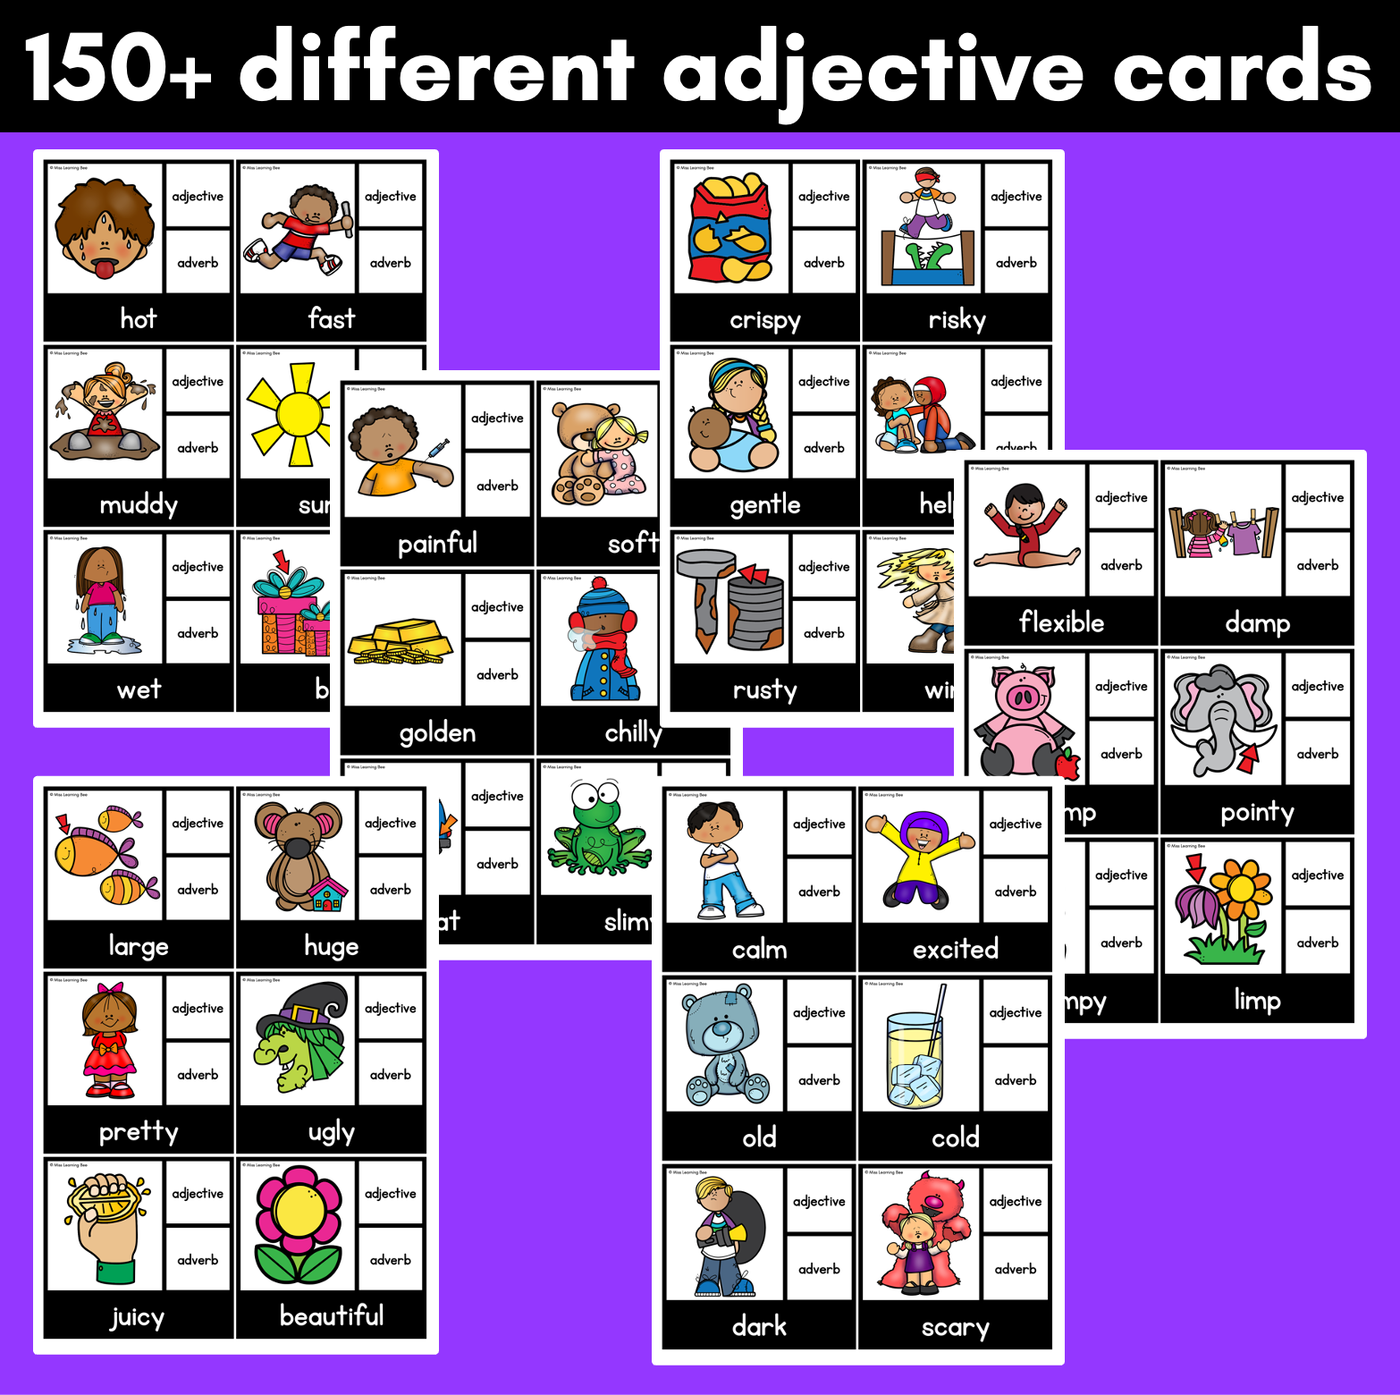 Adjective or Adverb Clip Cards - LOW PREP GRAMMAR ACTIVITY